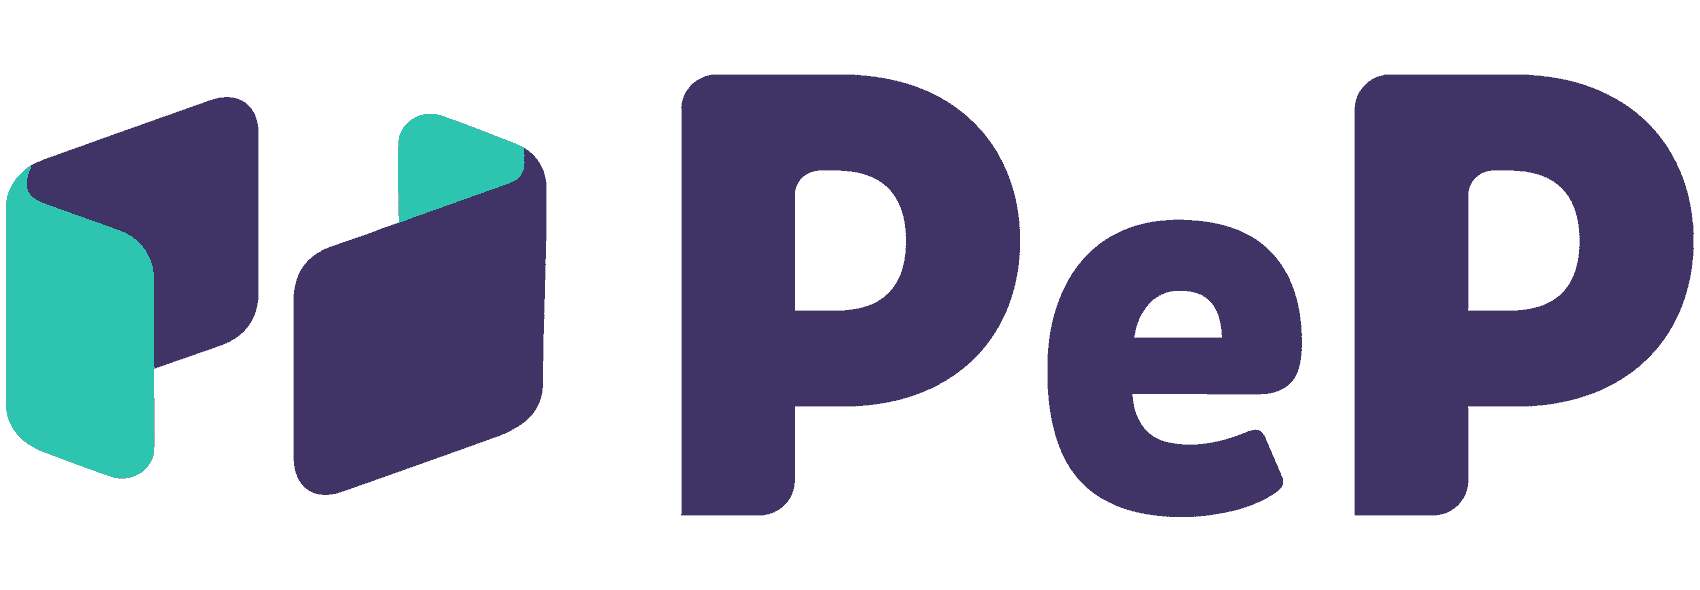 Английский пеп. Pep 1 лого. Pep проекты. Lel Pep логотип. Bolelin логотип.